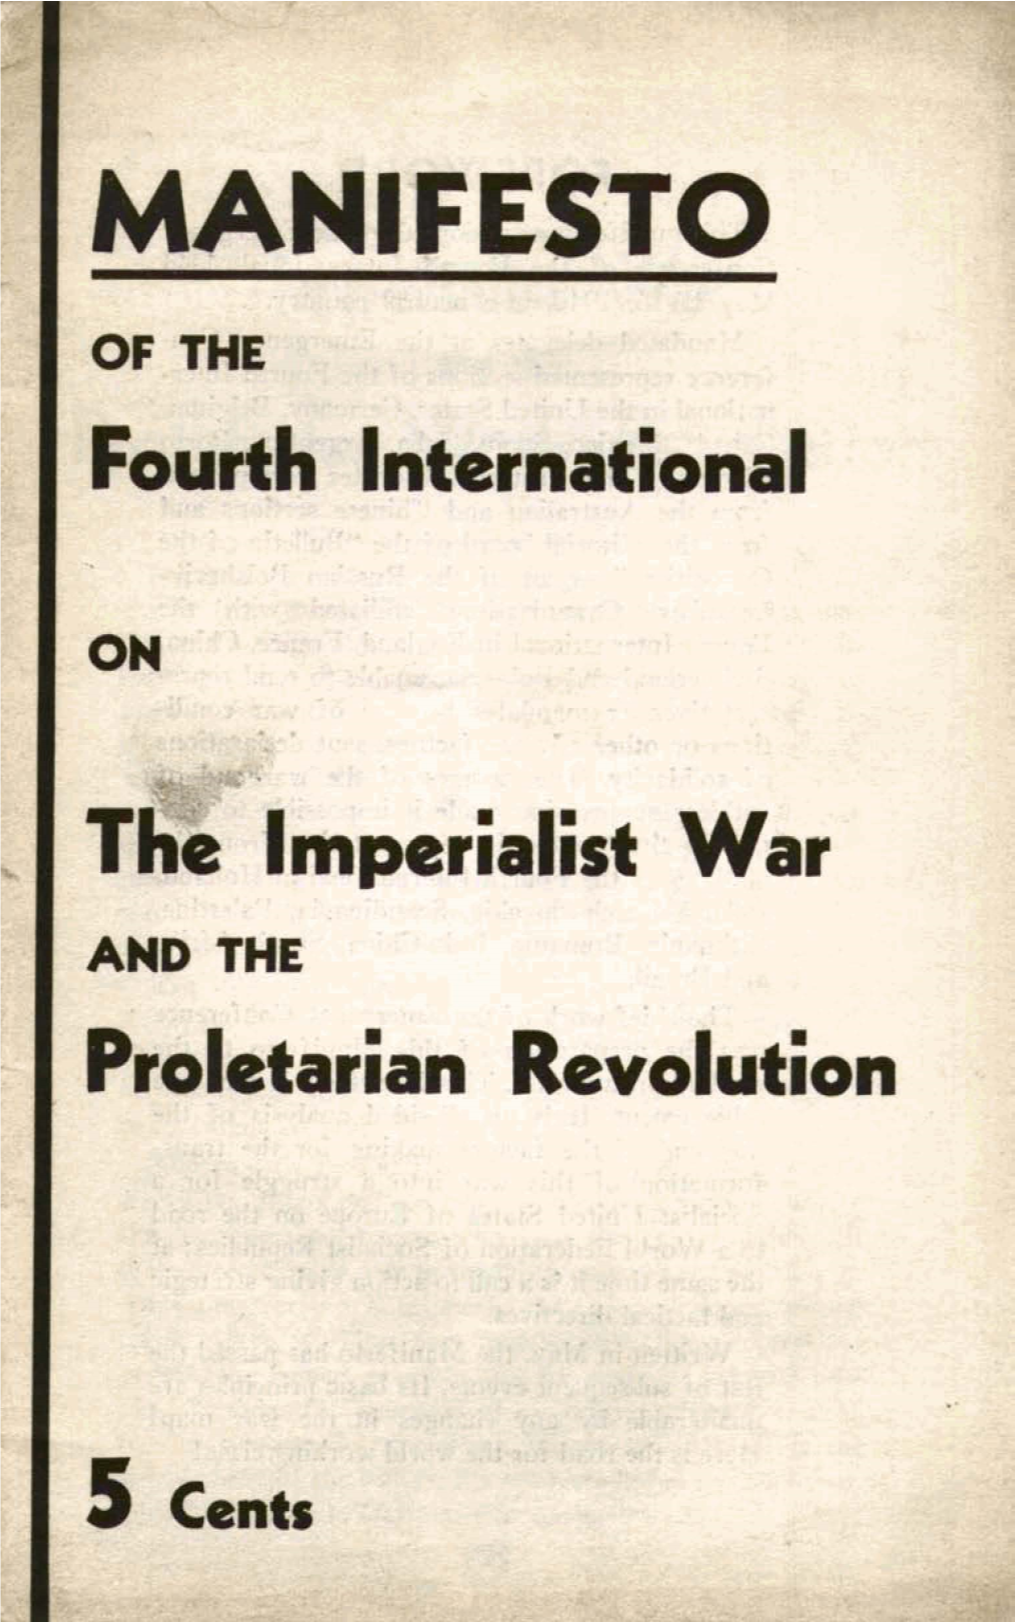 The Lhpcrialirt Hletarian Revolution